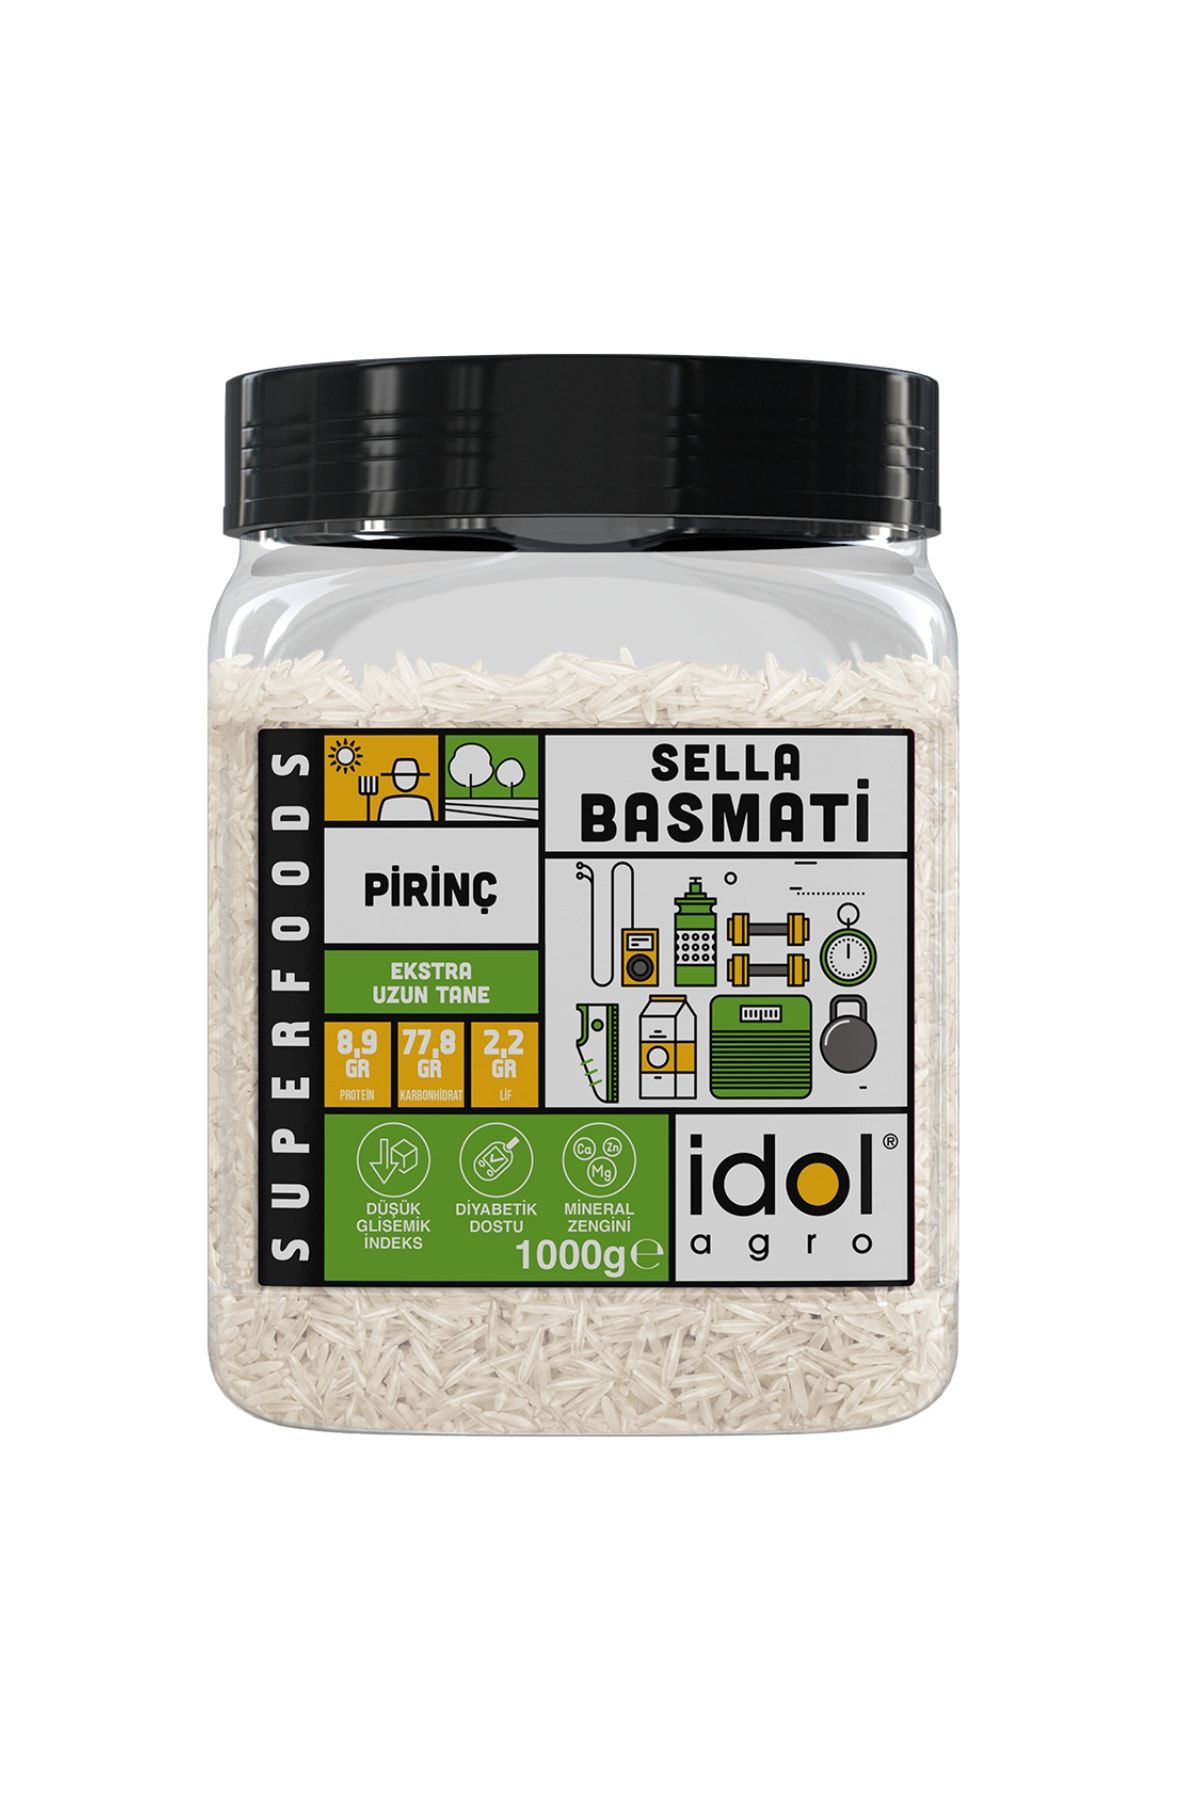 idolagro Sella Basmati Pirinç - 1000 gr - Superfoods - Parboiled, Yapışmaz Aromatik Extra Uzun Tane